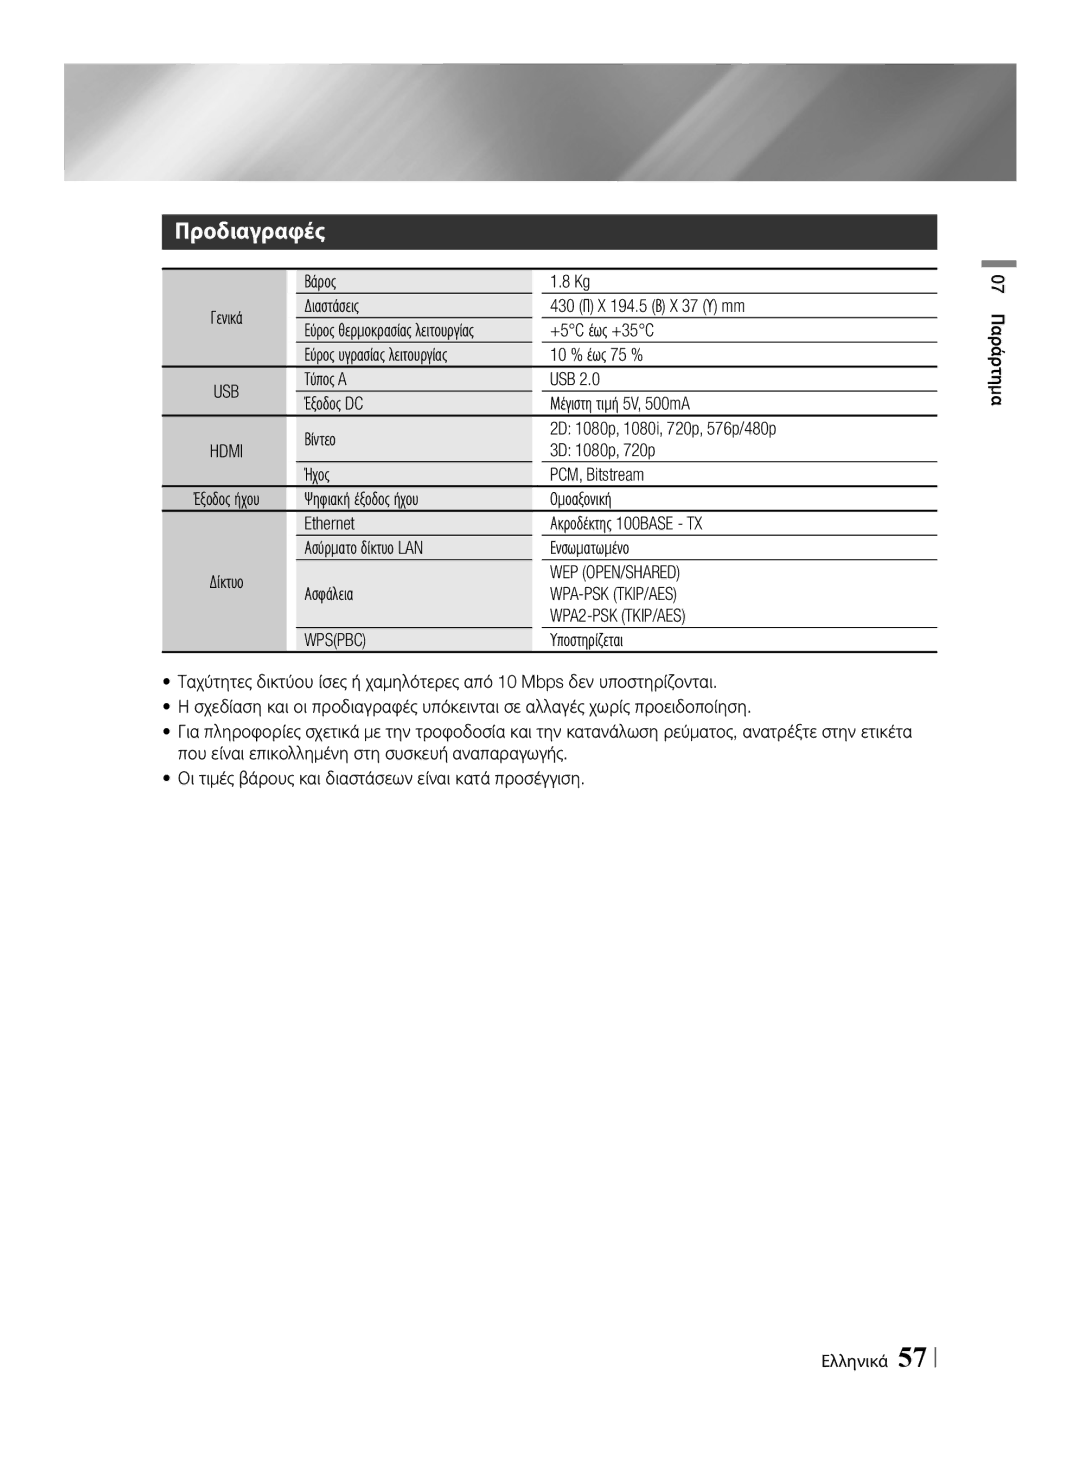 Samsung BD-E6100/EN manual Προδιαγραφές, Wep Open/Shared, Wpa-Psk Tkip/Aes, WPA2-PSK TKIP/AES, Wpspbc 